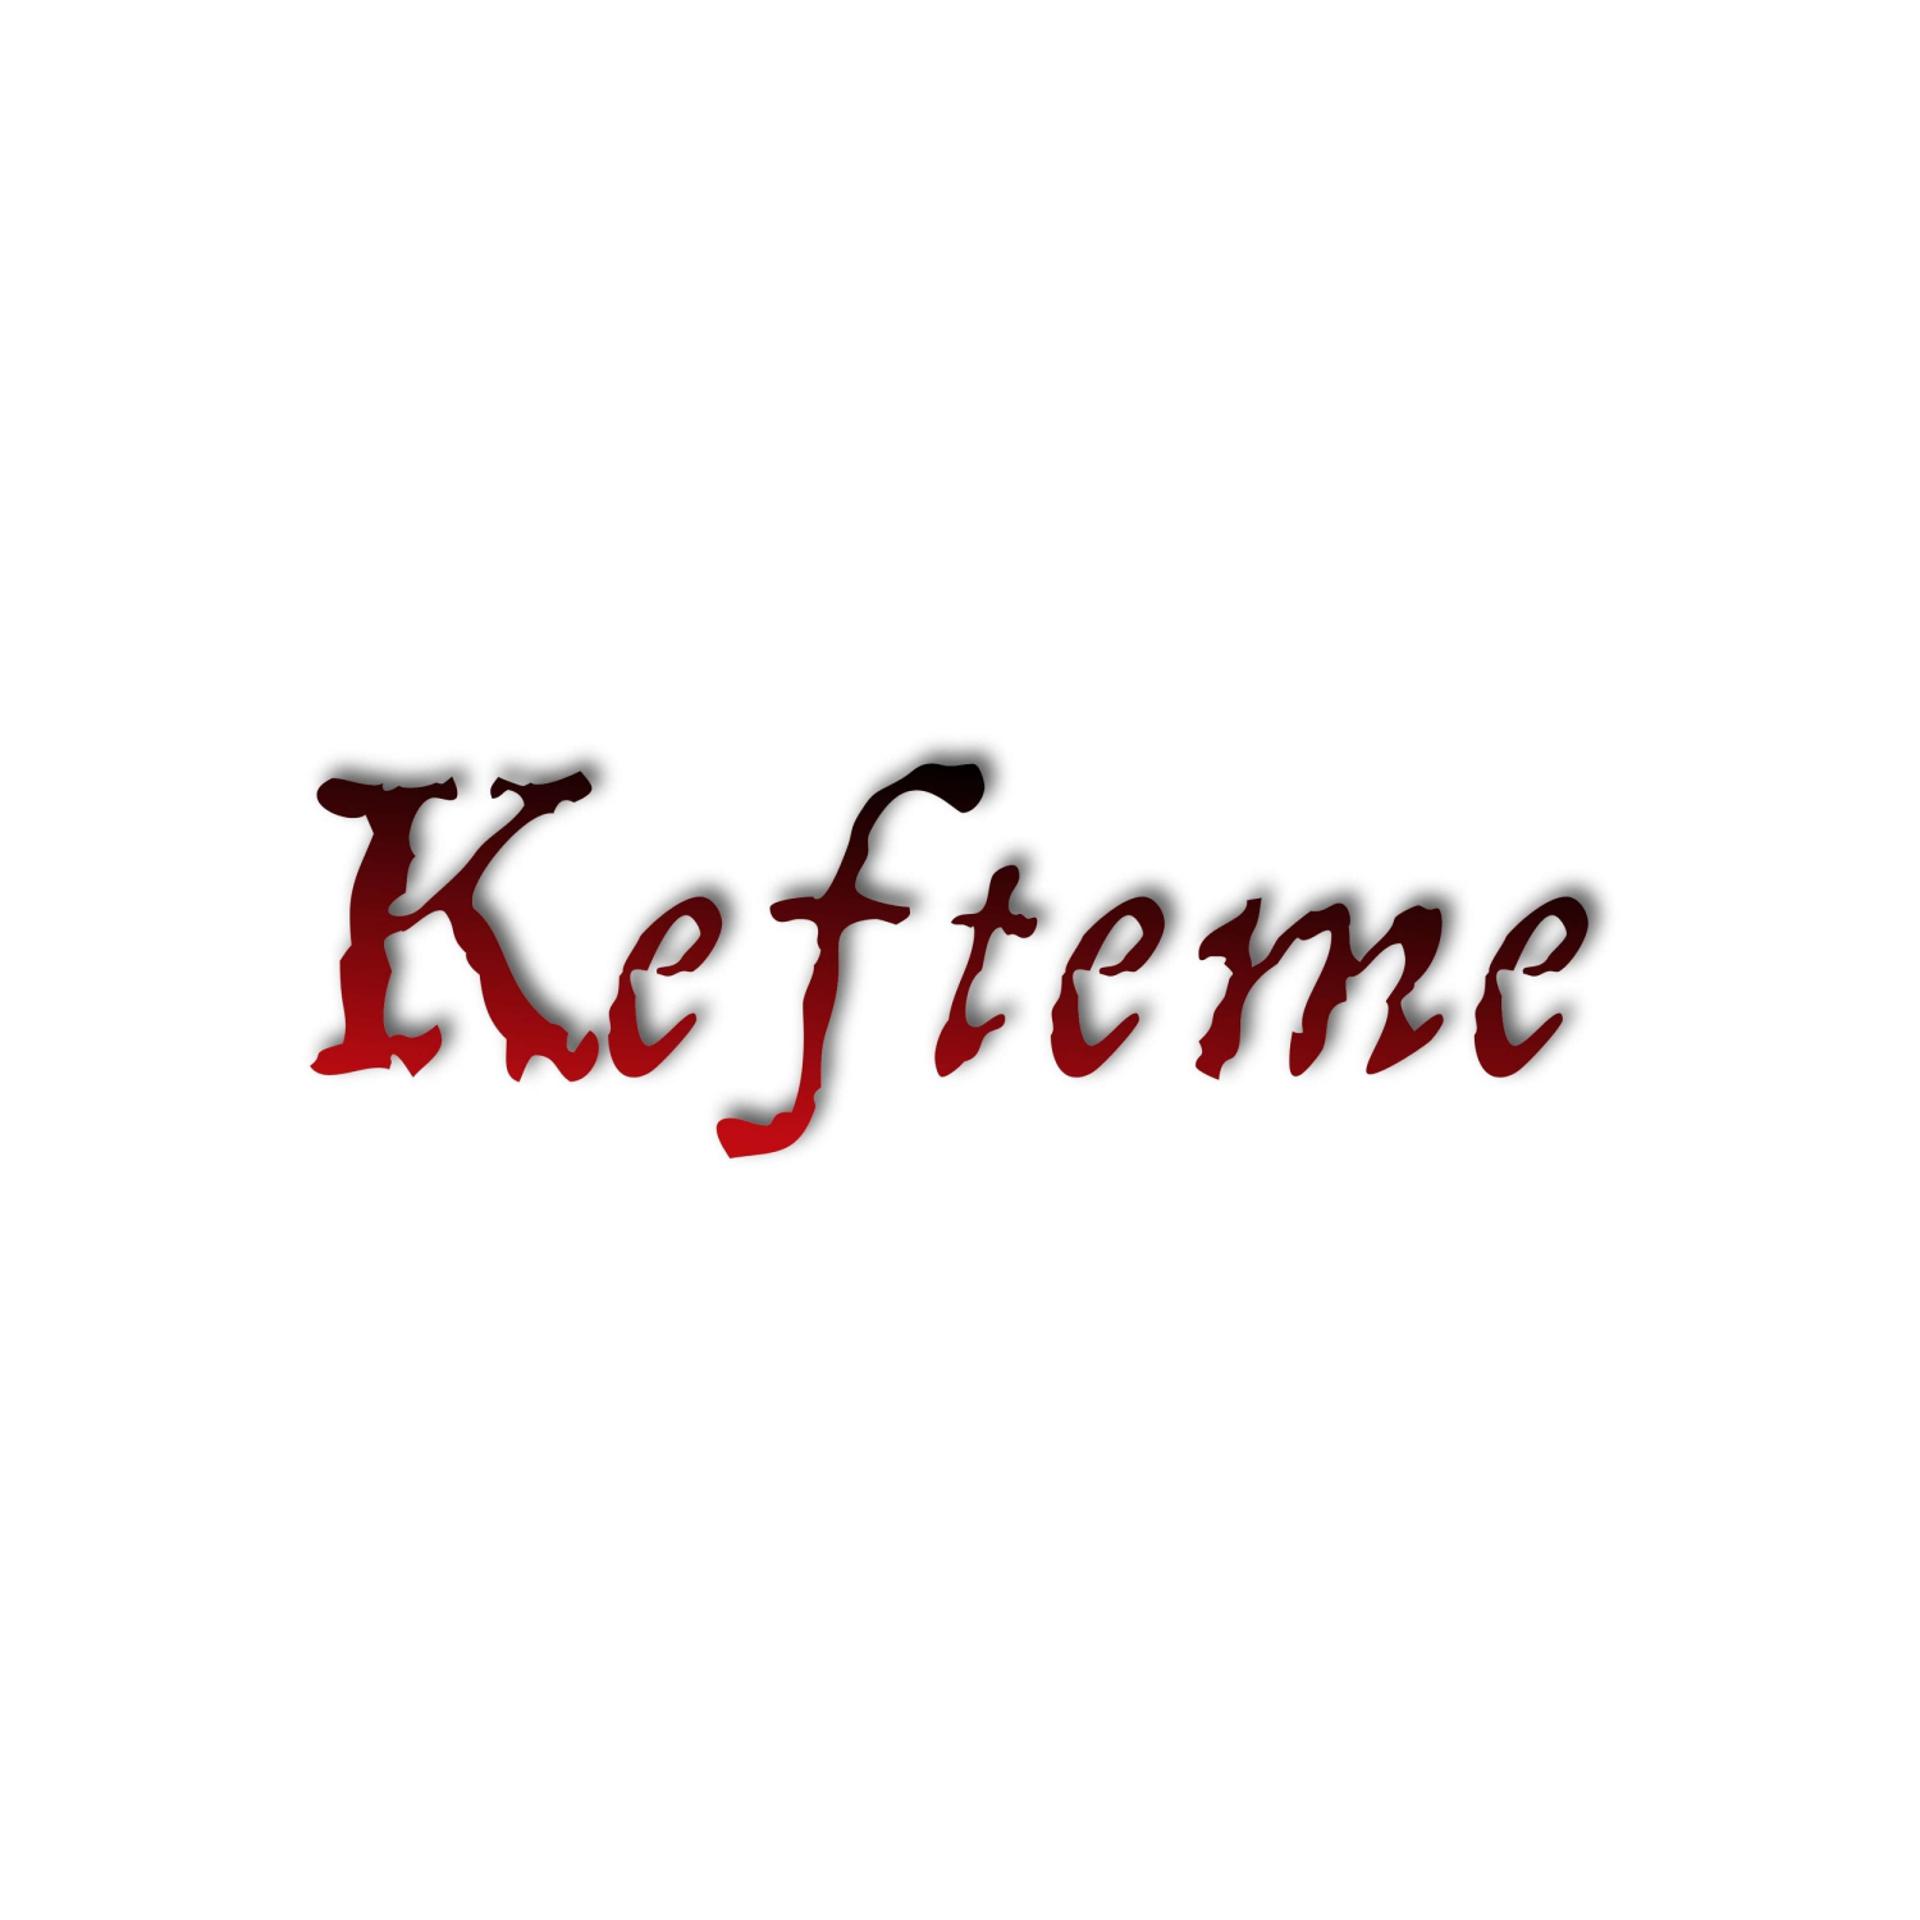 Постер альбома Kefteme